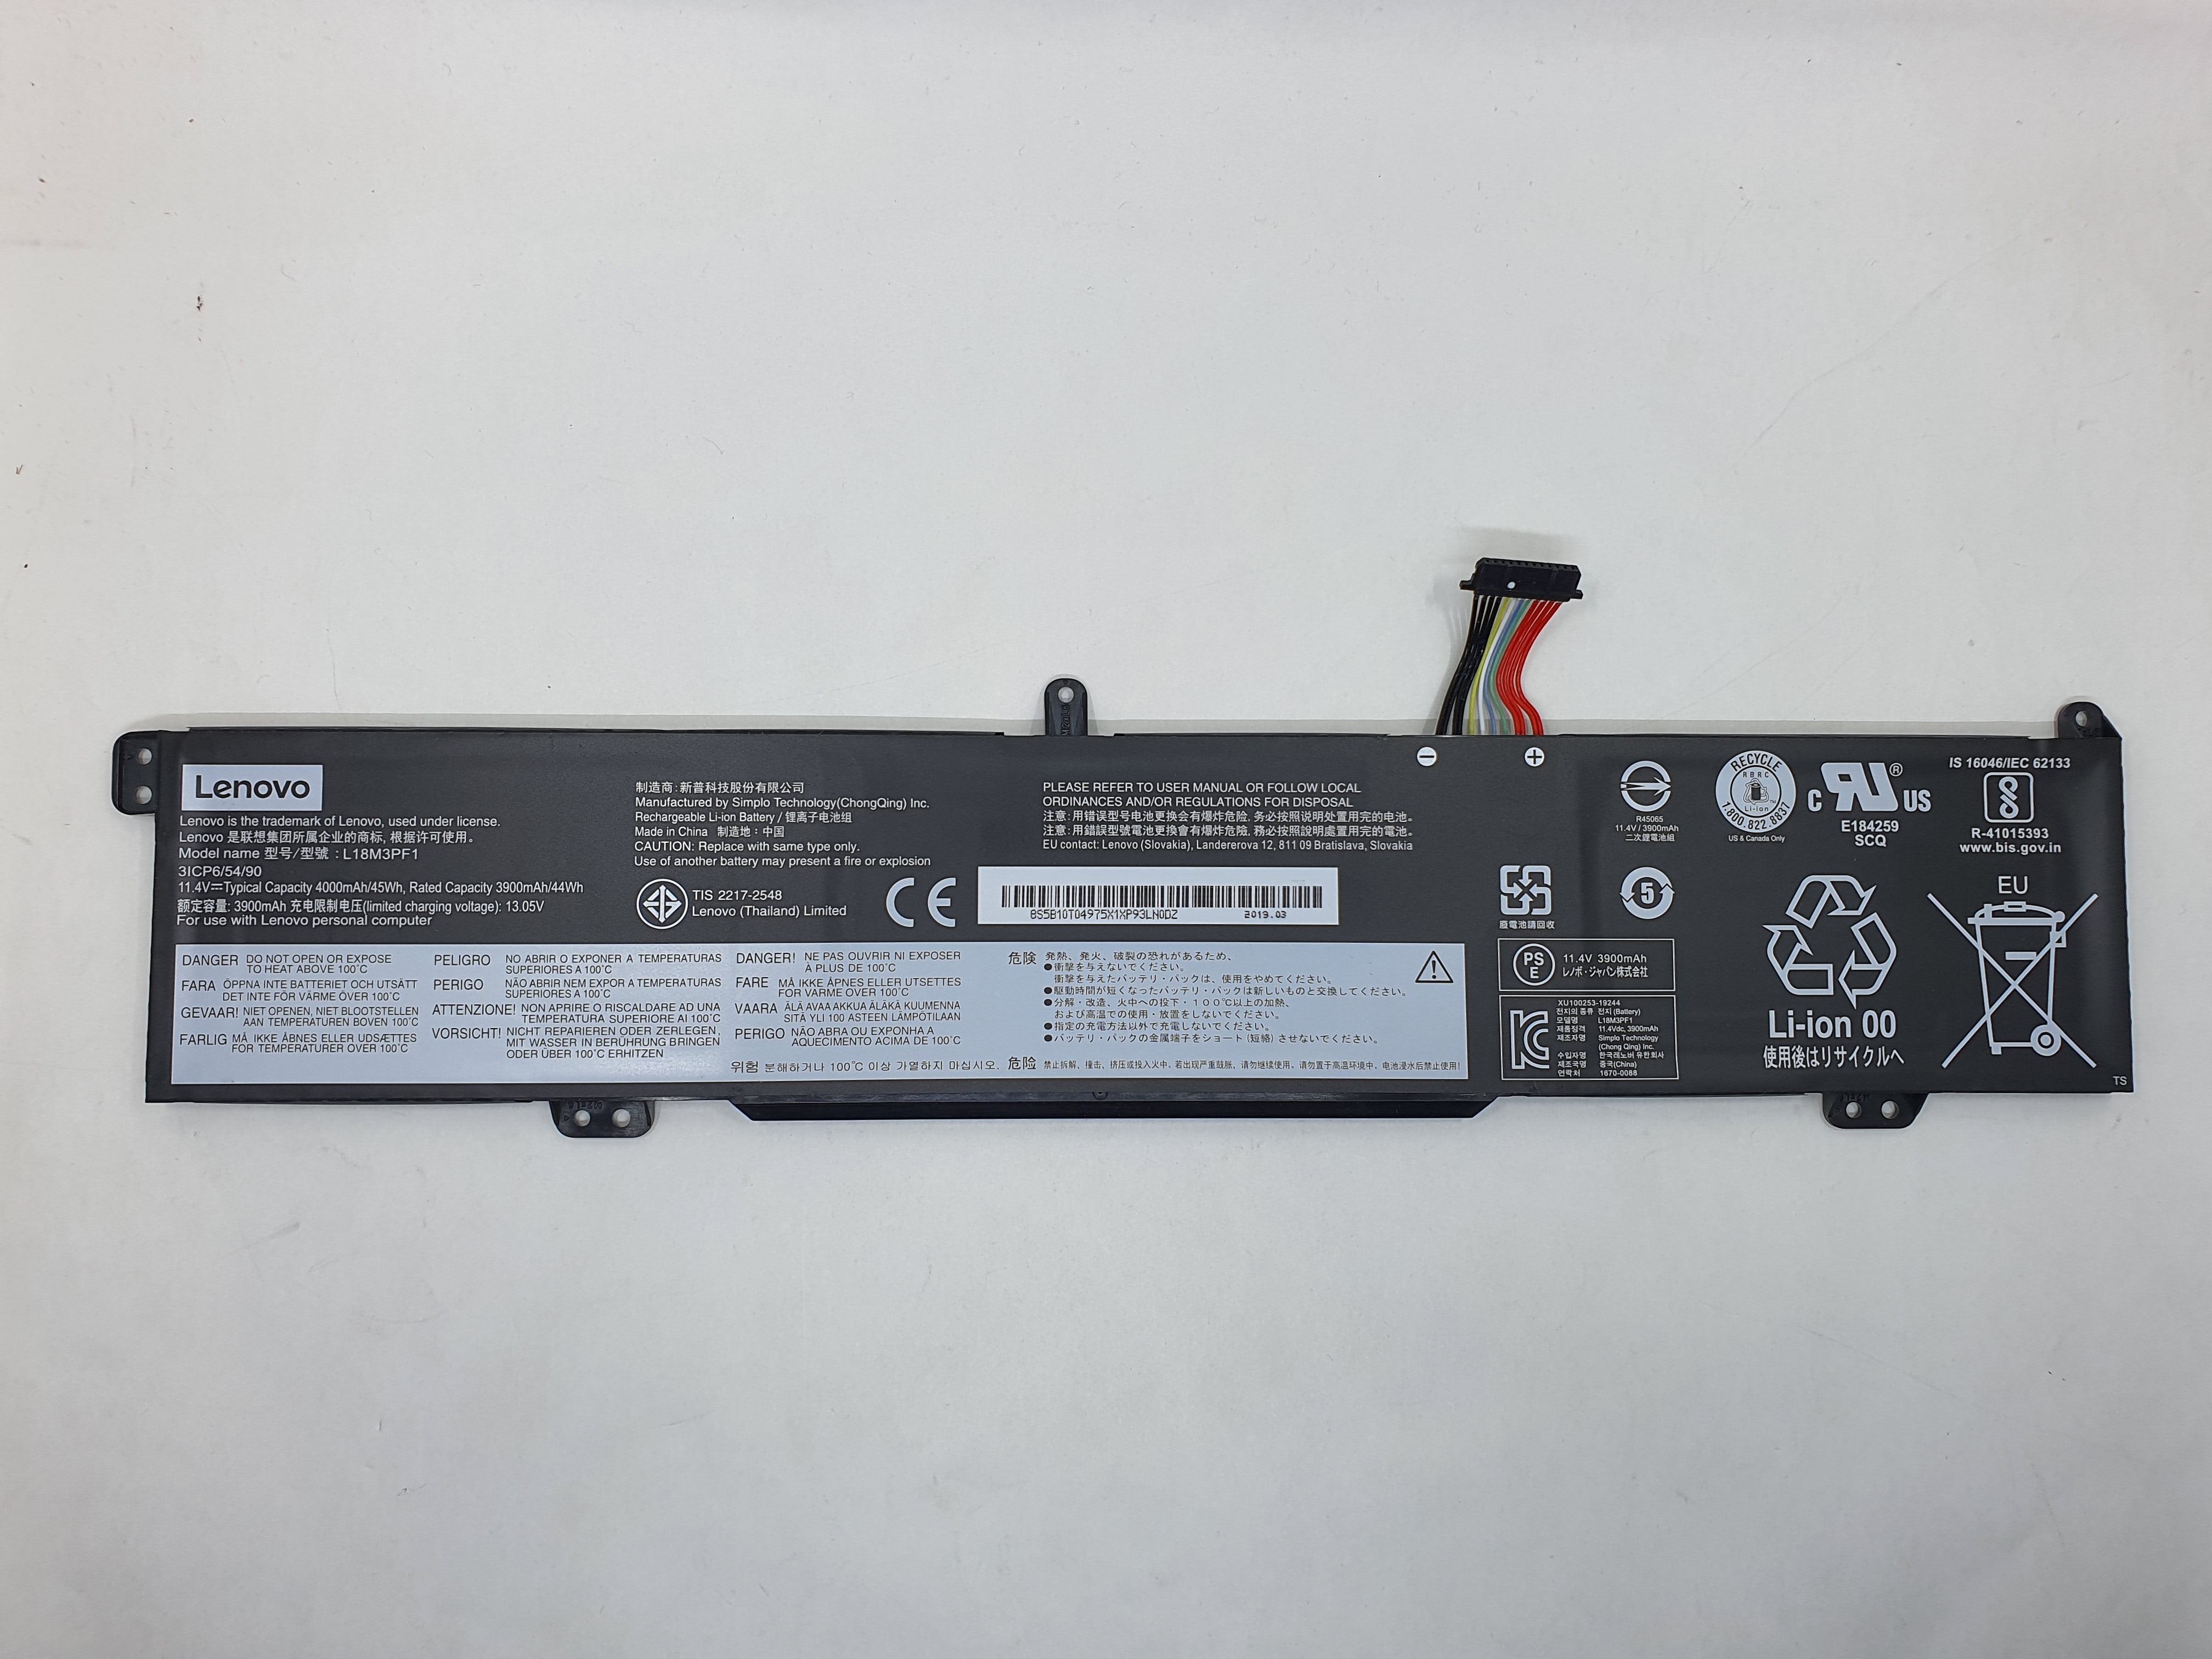 Lenovo Battery L340-15IRH A1 for Replacement - Lenovo IdeaPad L340-15IRH